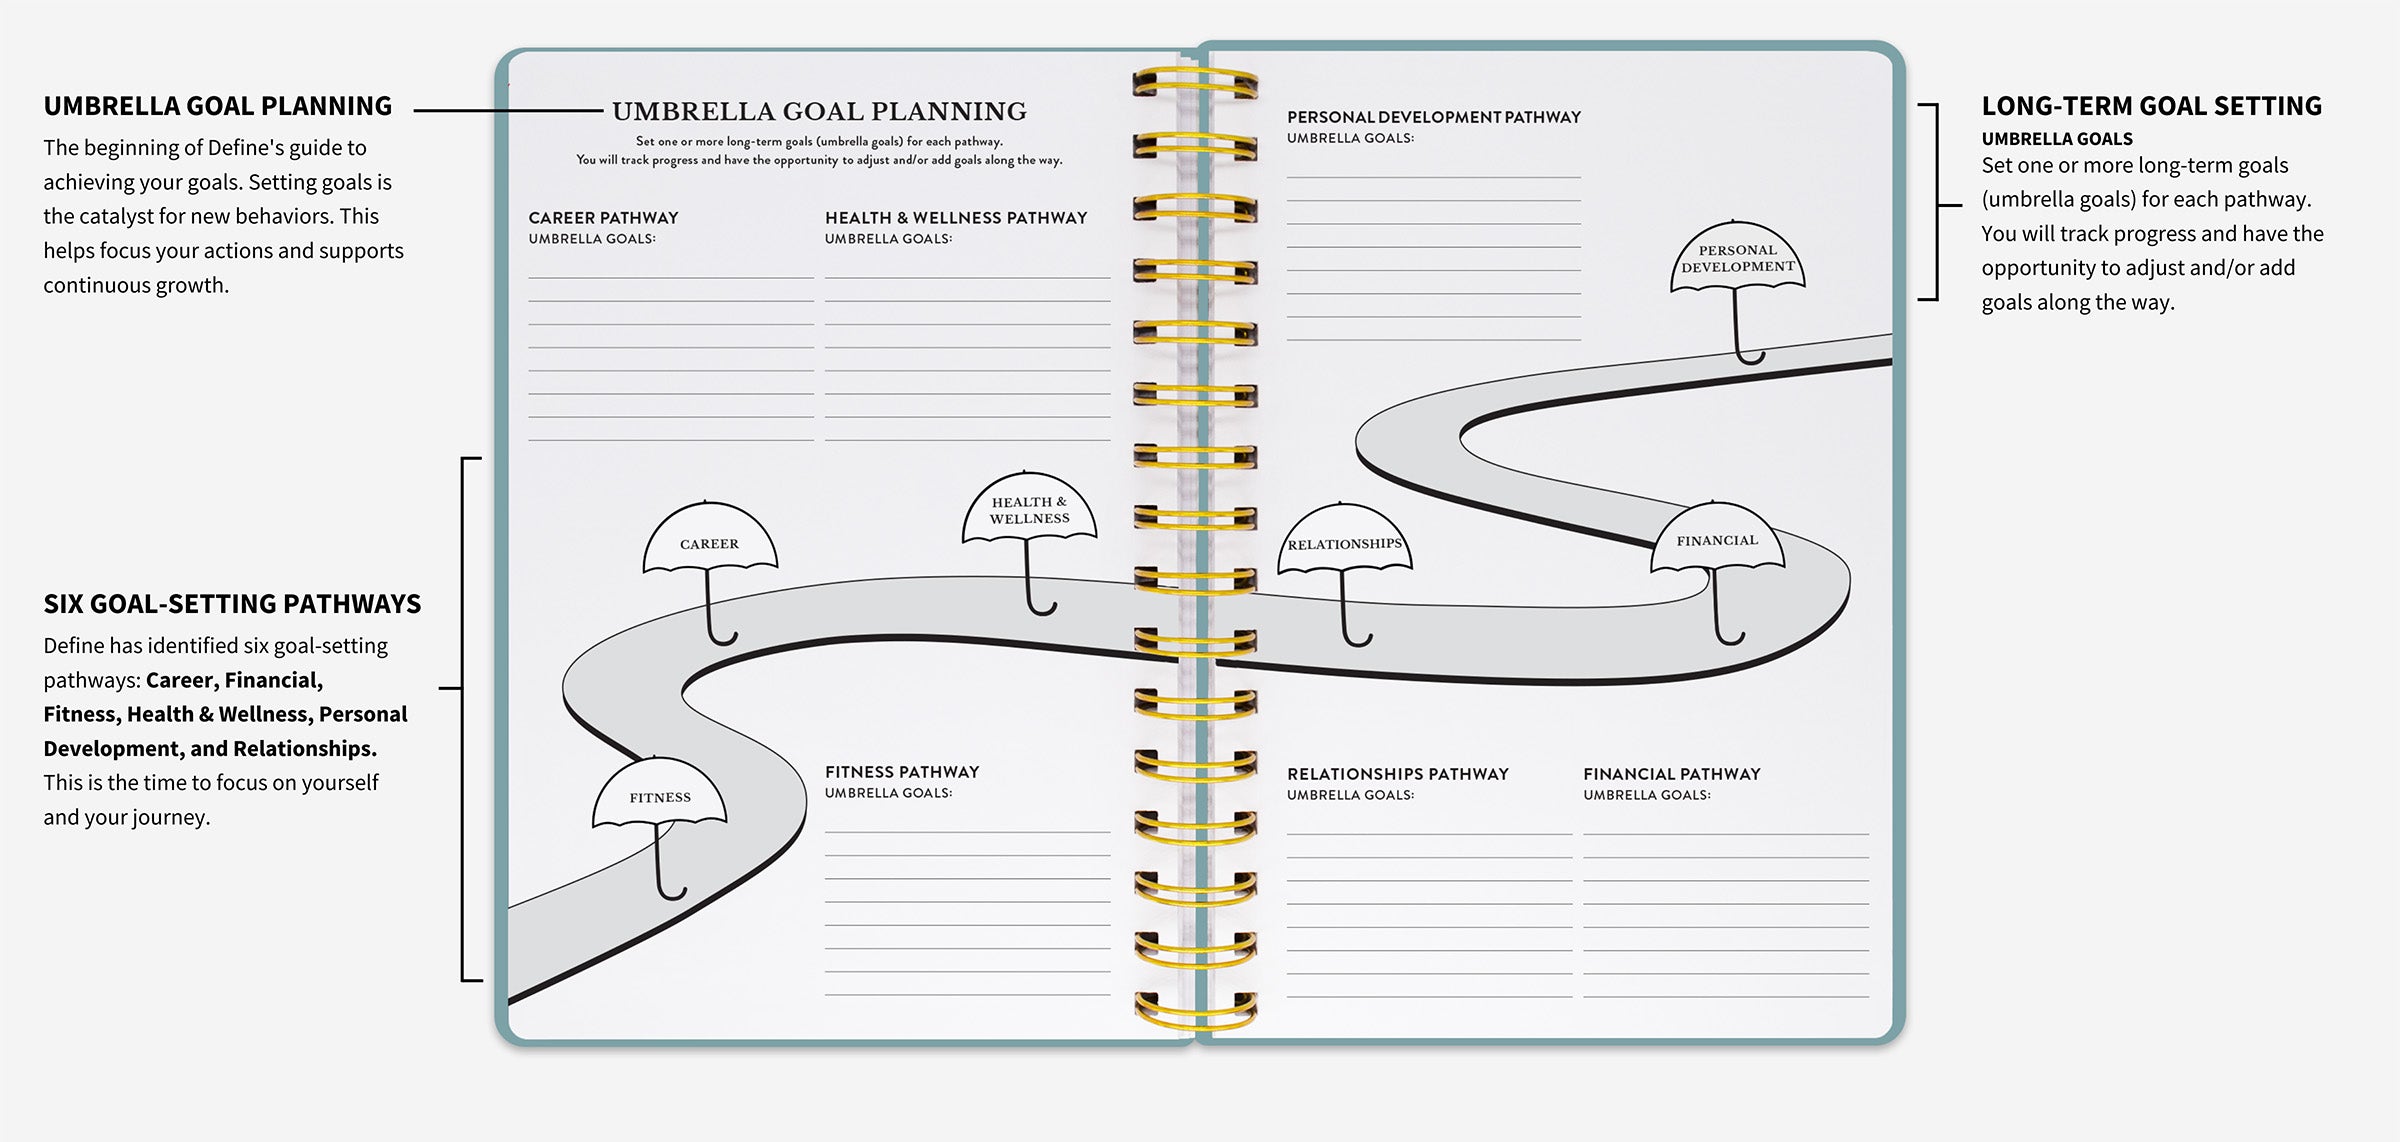 Example of the umbrella goal planning spread.